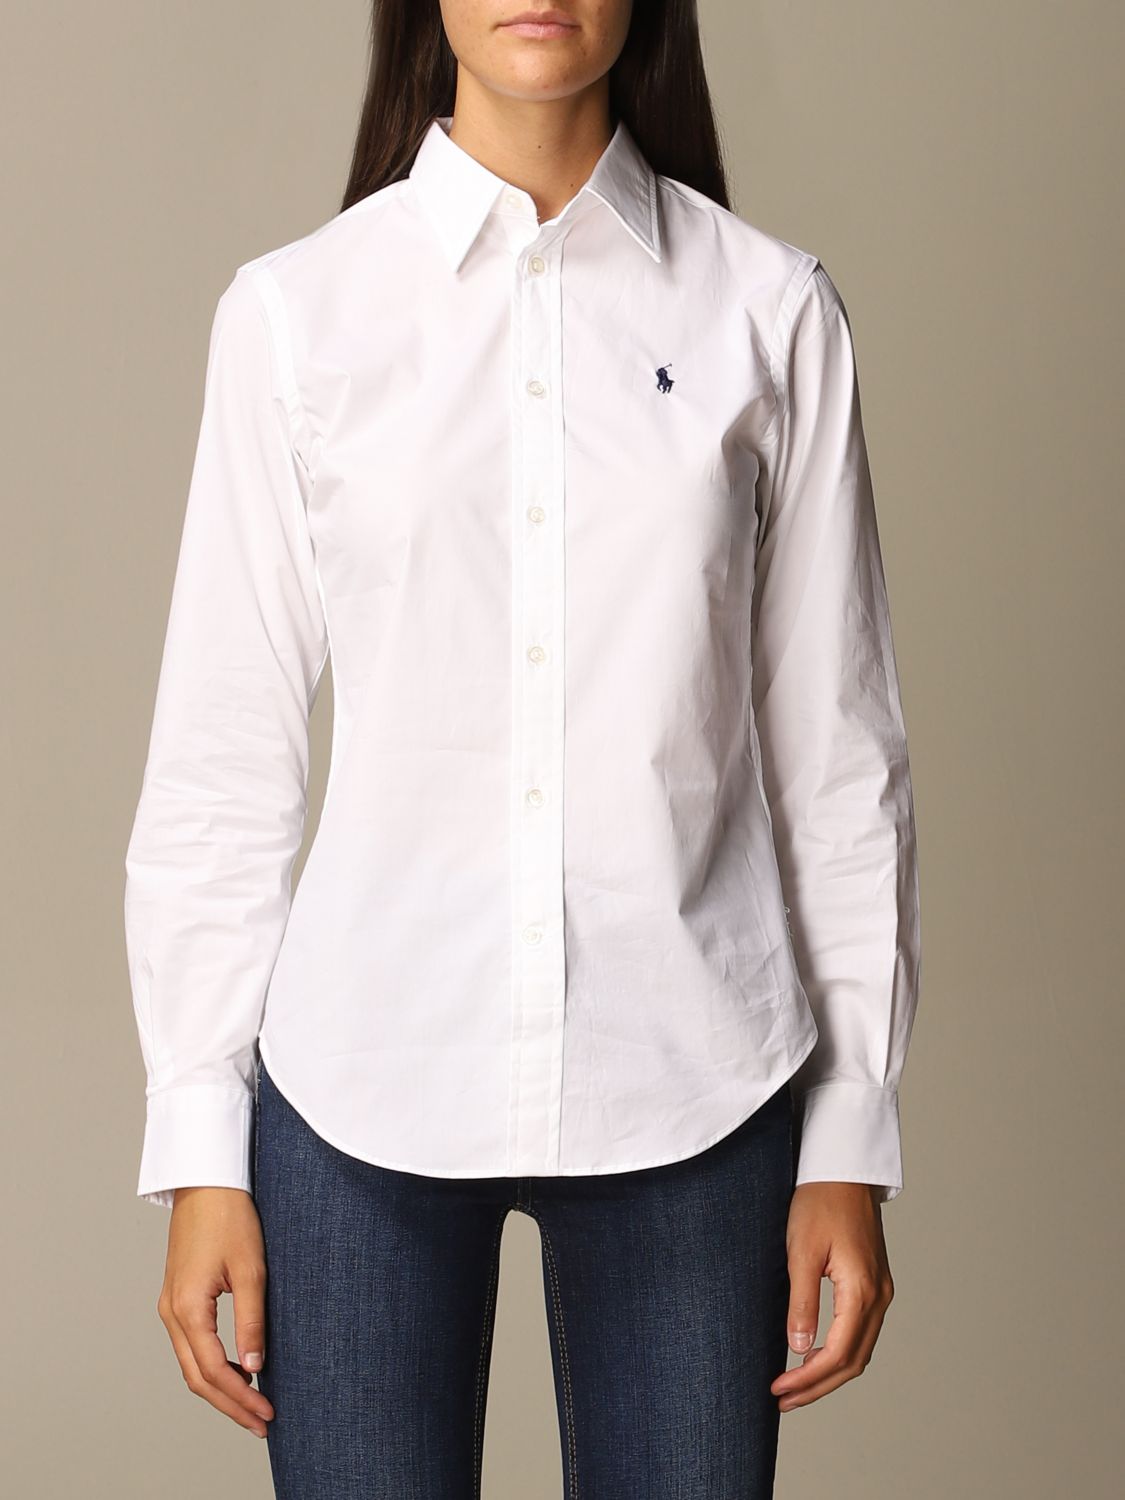 Polo Ralph Lauren Outlet: basic shirt - White | Polo Ralph Lauren shirt  211806180 online on 